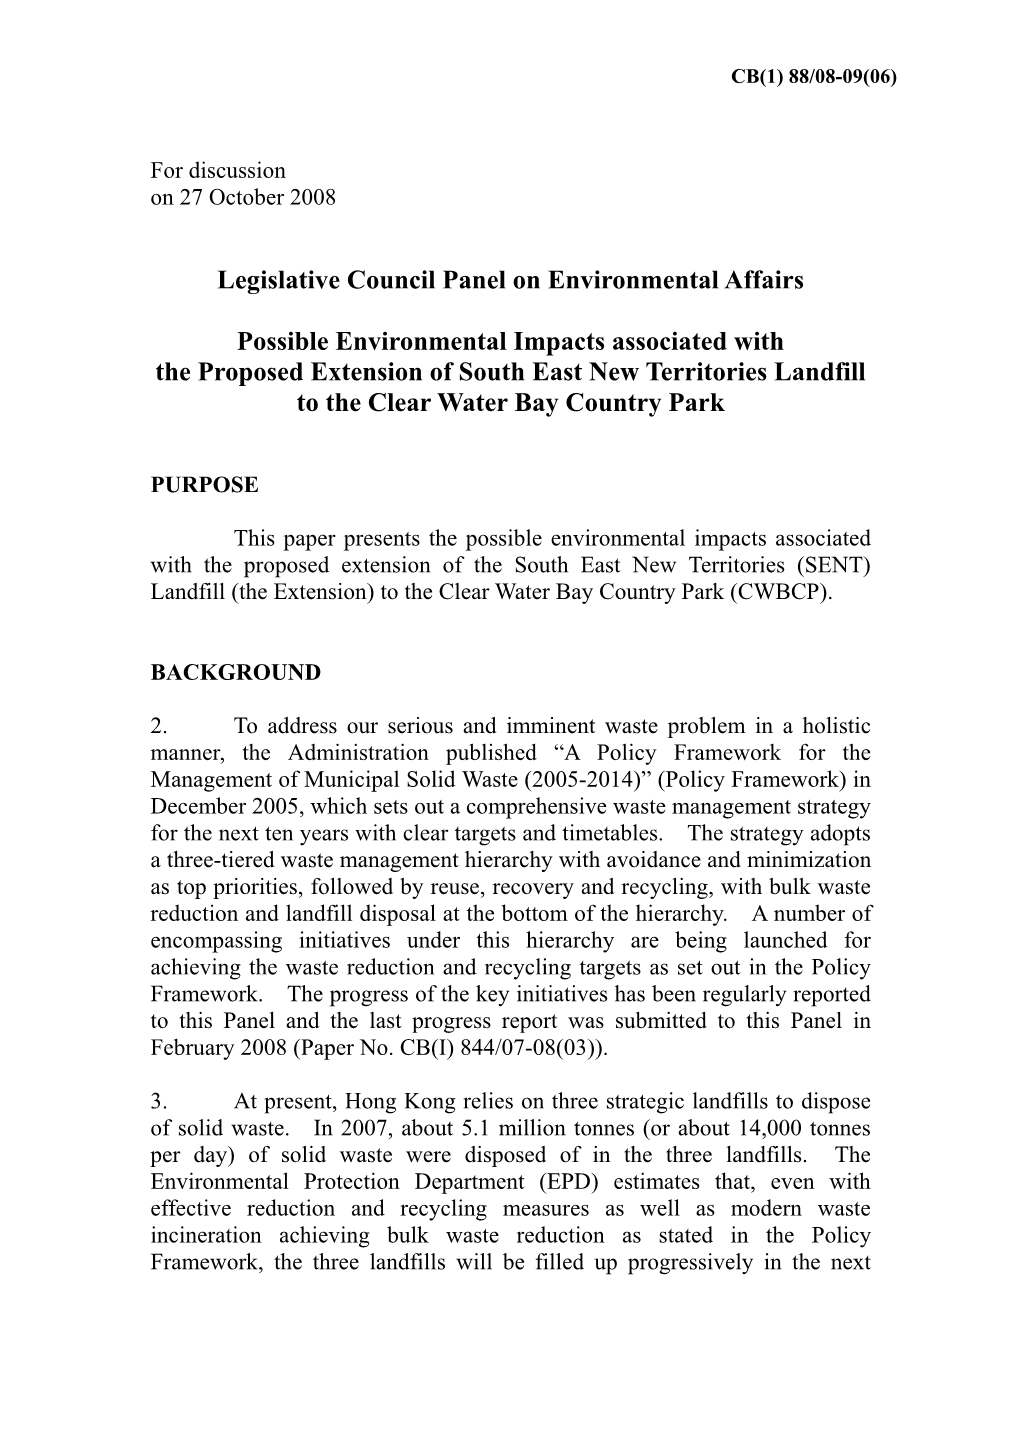 Legislative Council Panel on Environmental Affairs Possible